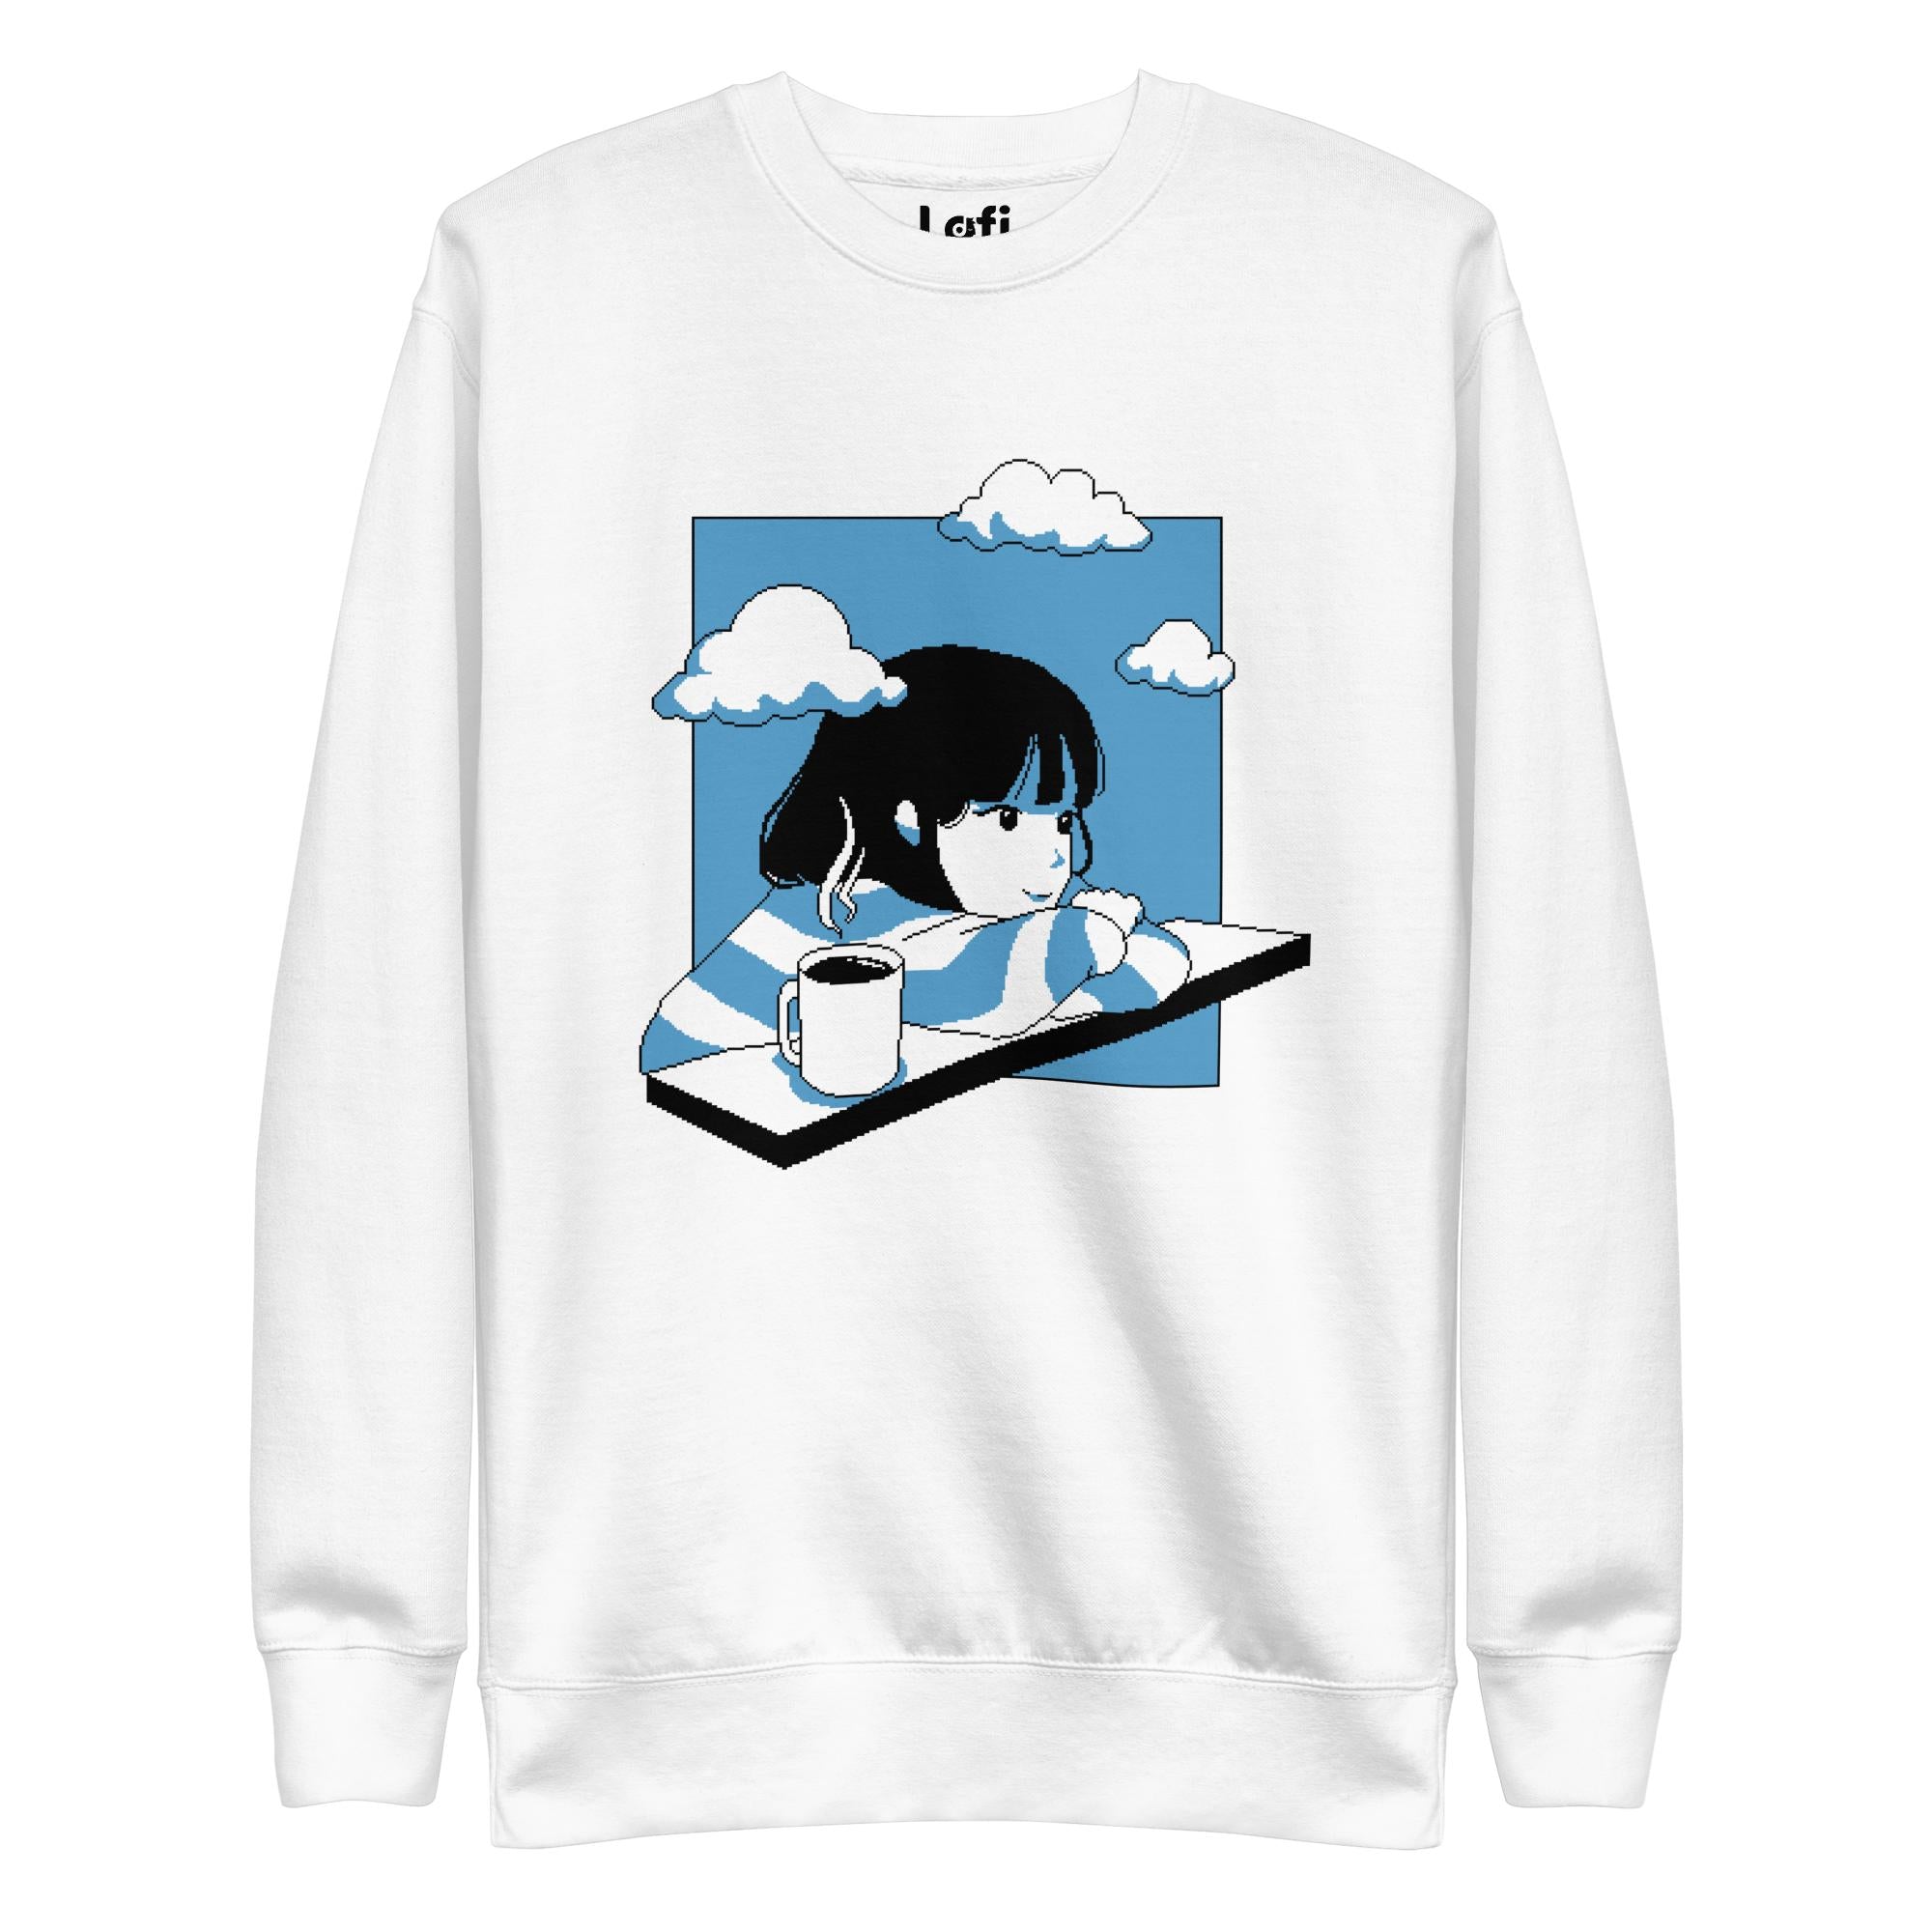 A Daydream Away Sweatshirt